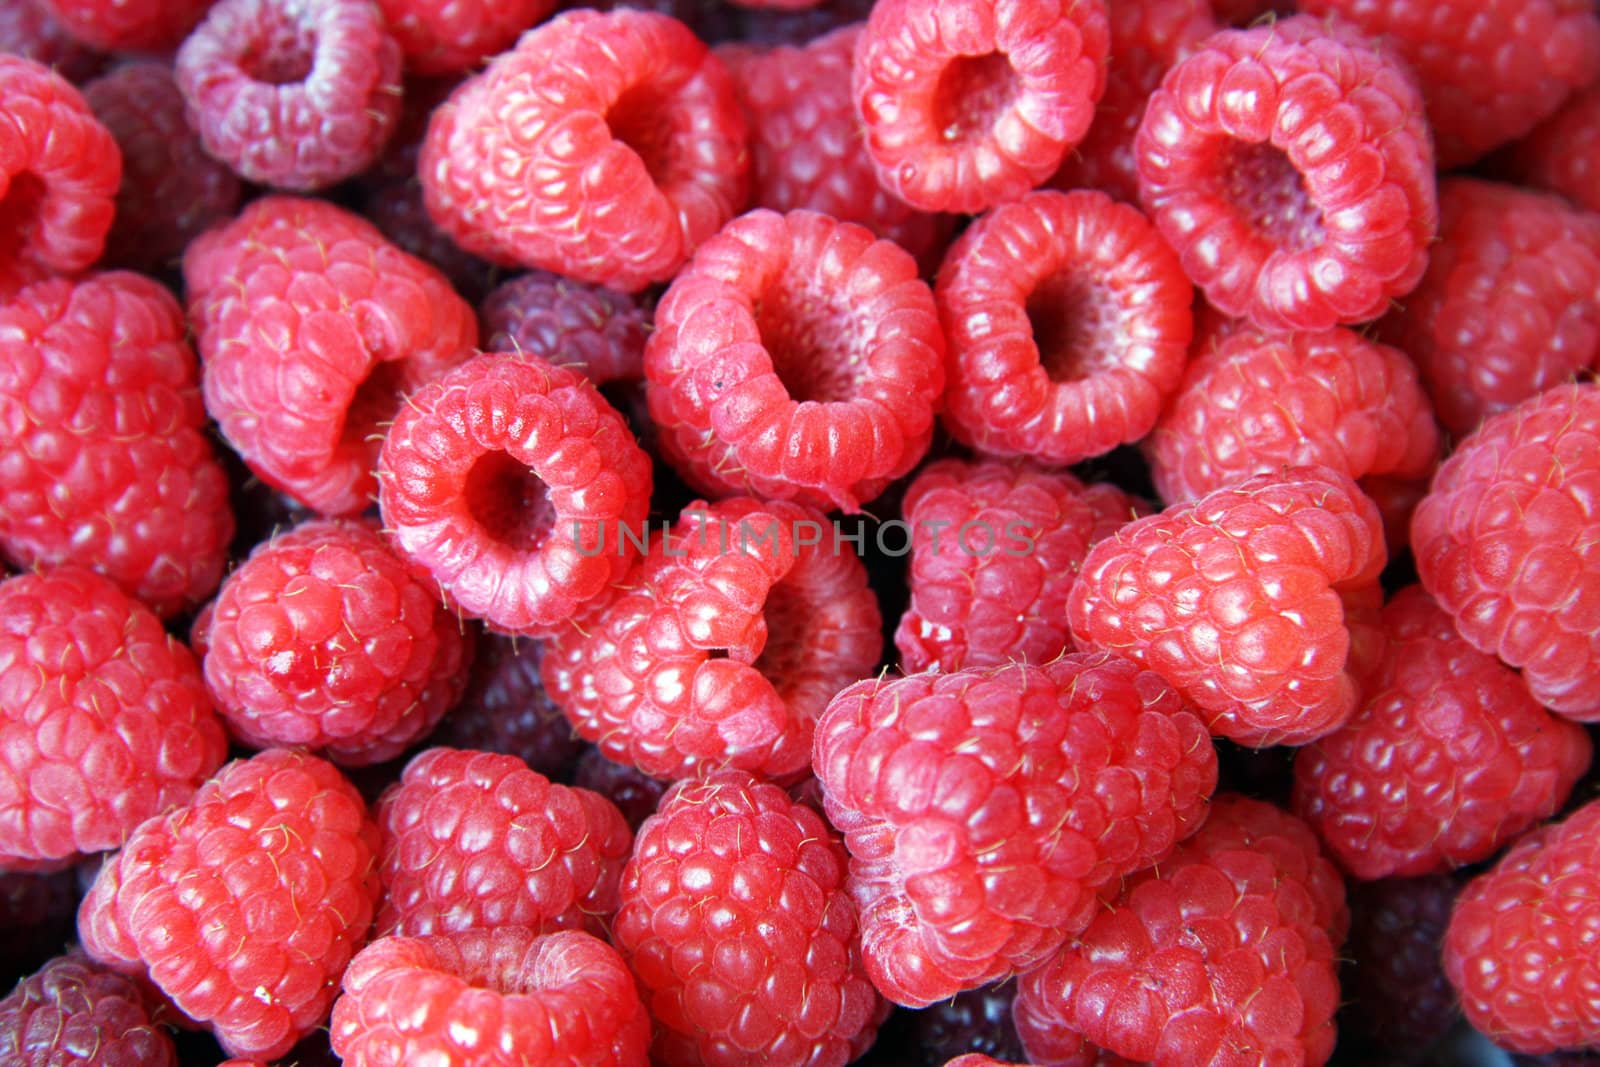 Raspberries by raliand